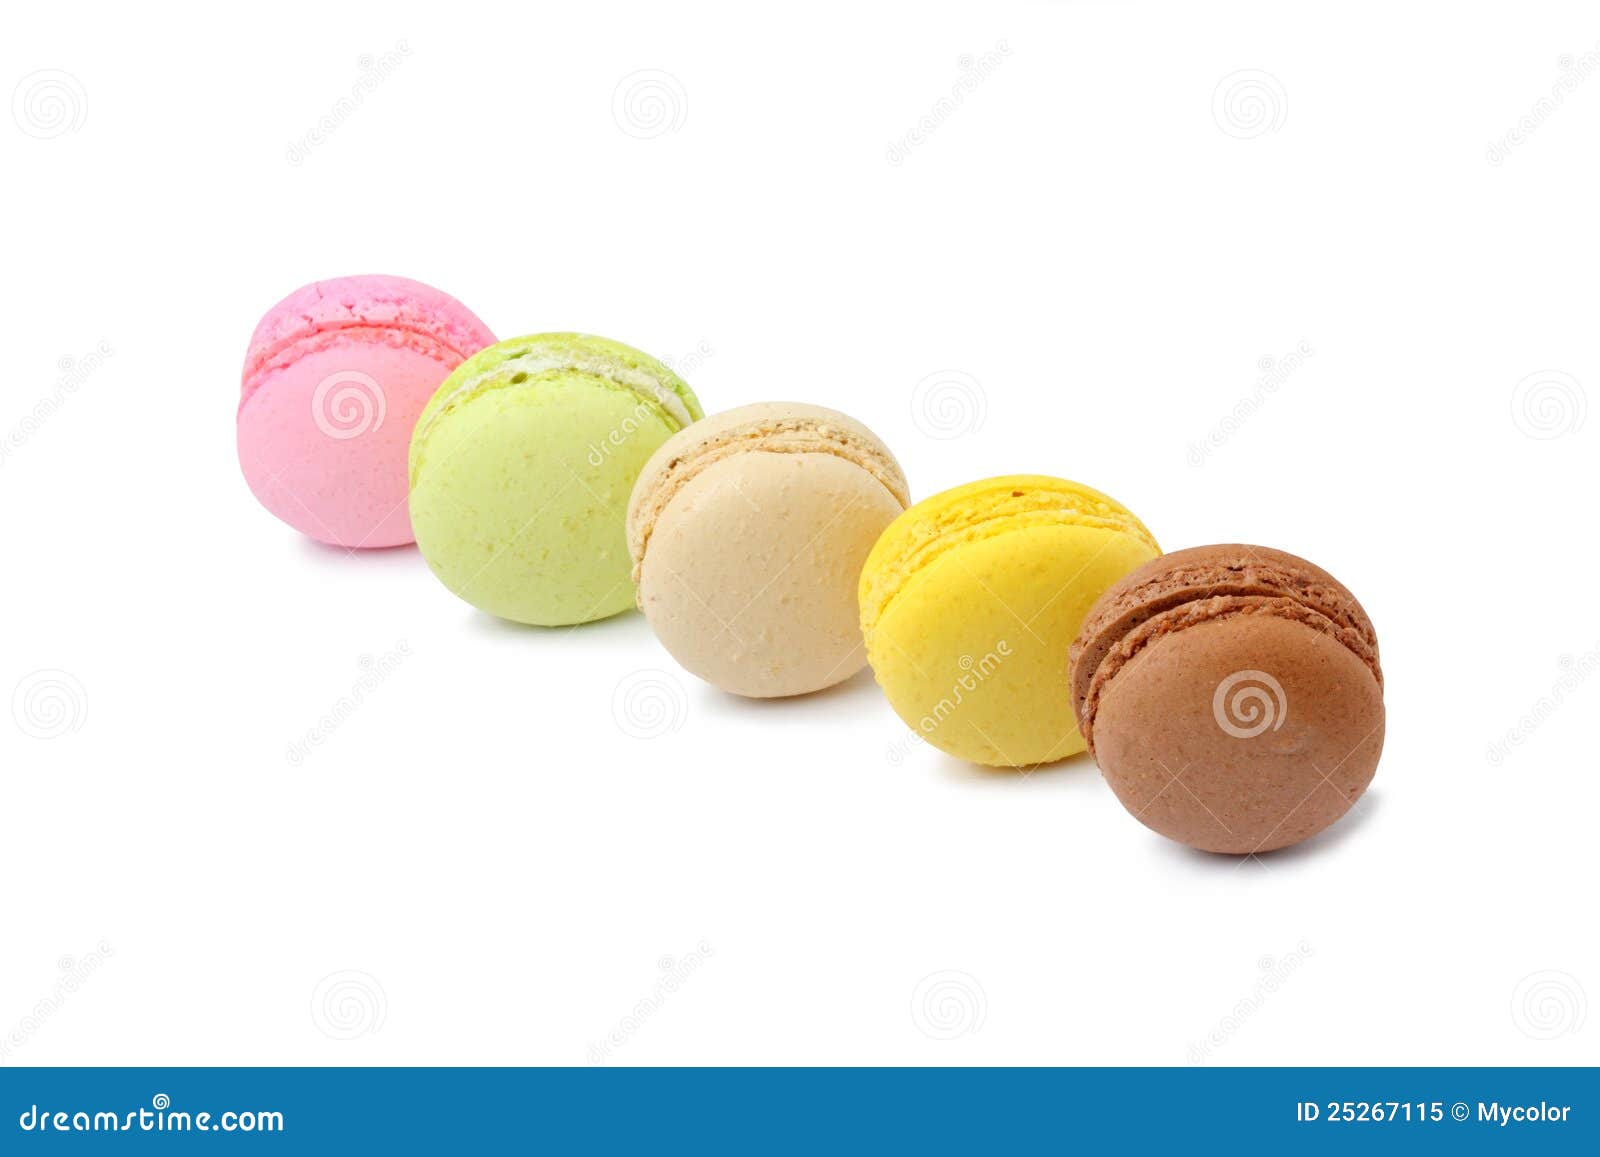 Macarons stock image. Image of buttercream, almond, food - 25267115